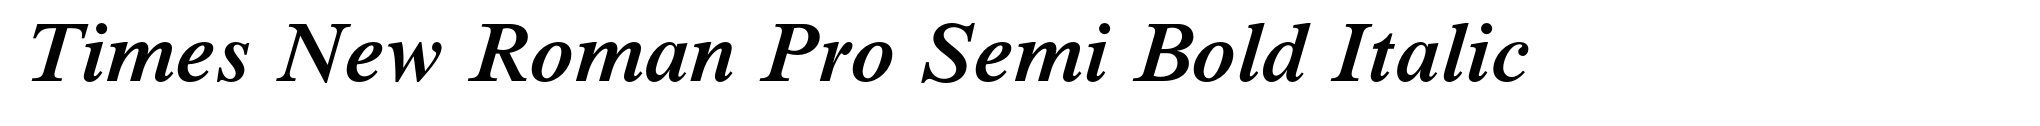 Times New Roman Pro Semi Bold Italic image